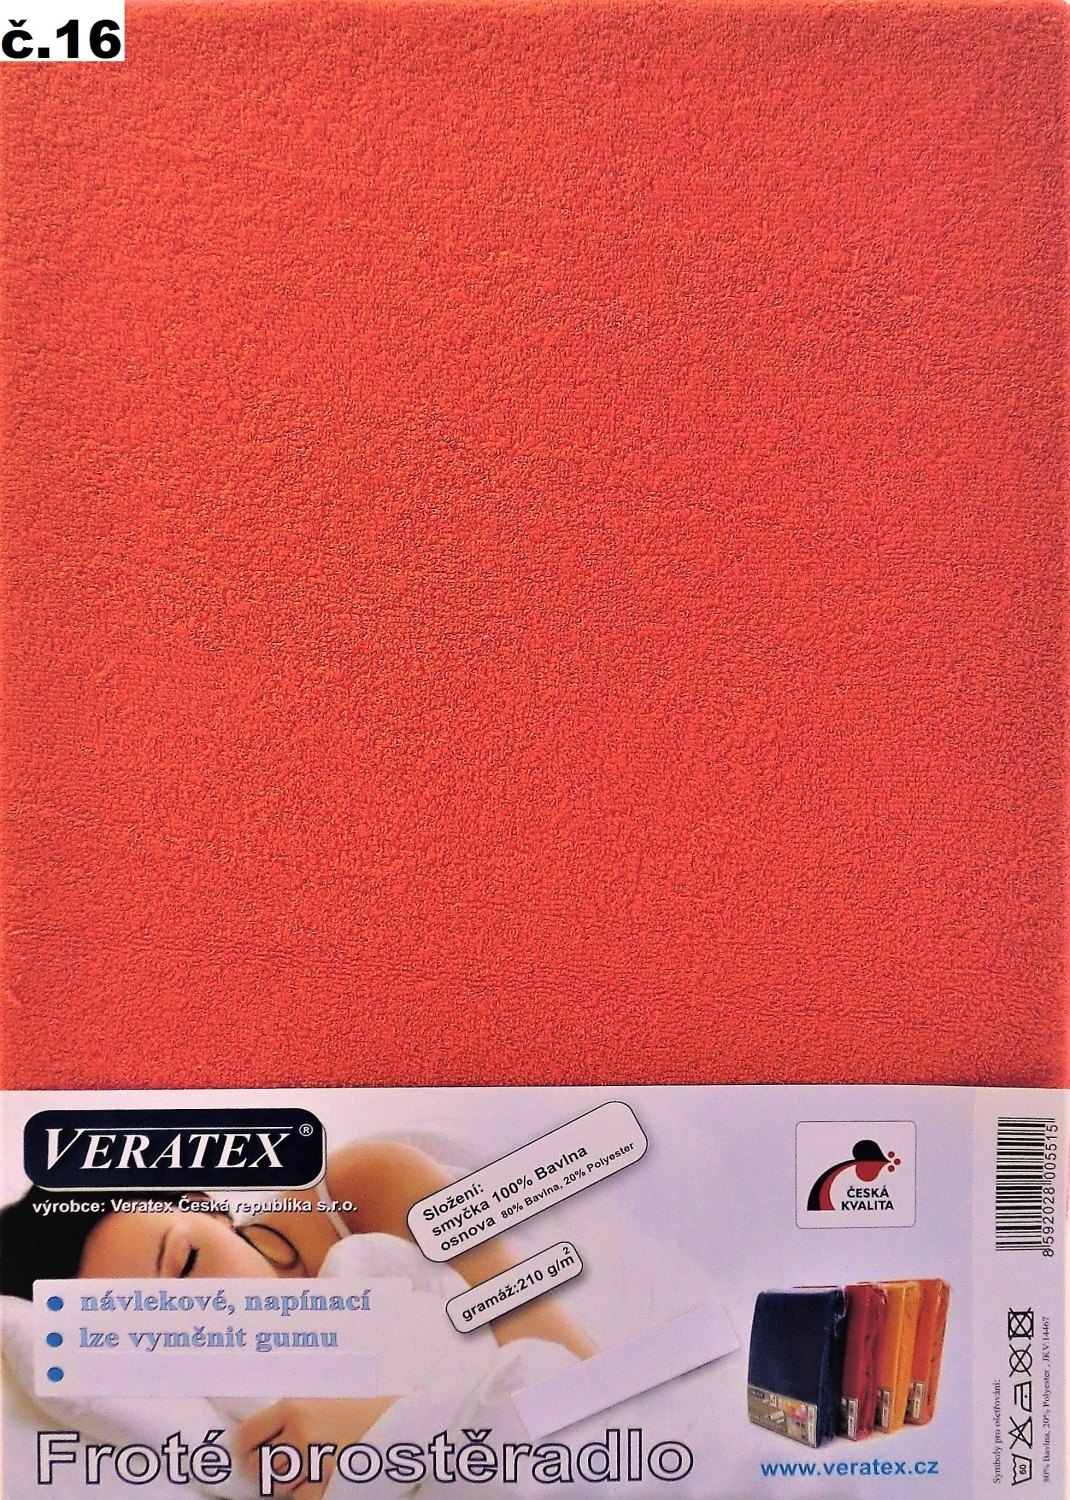 Veratex Froté prostěradlo dvoulůžko 180x200 cm (č.16 malina)